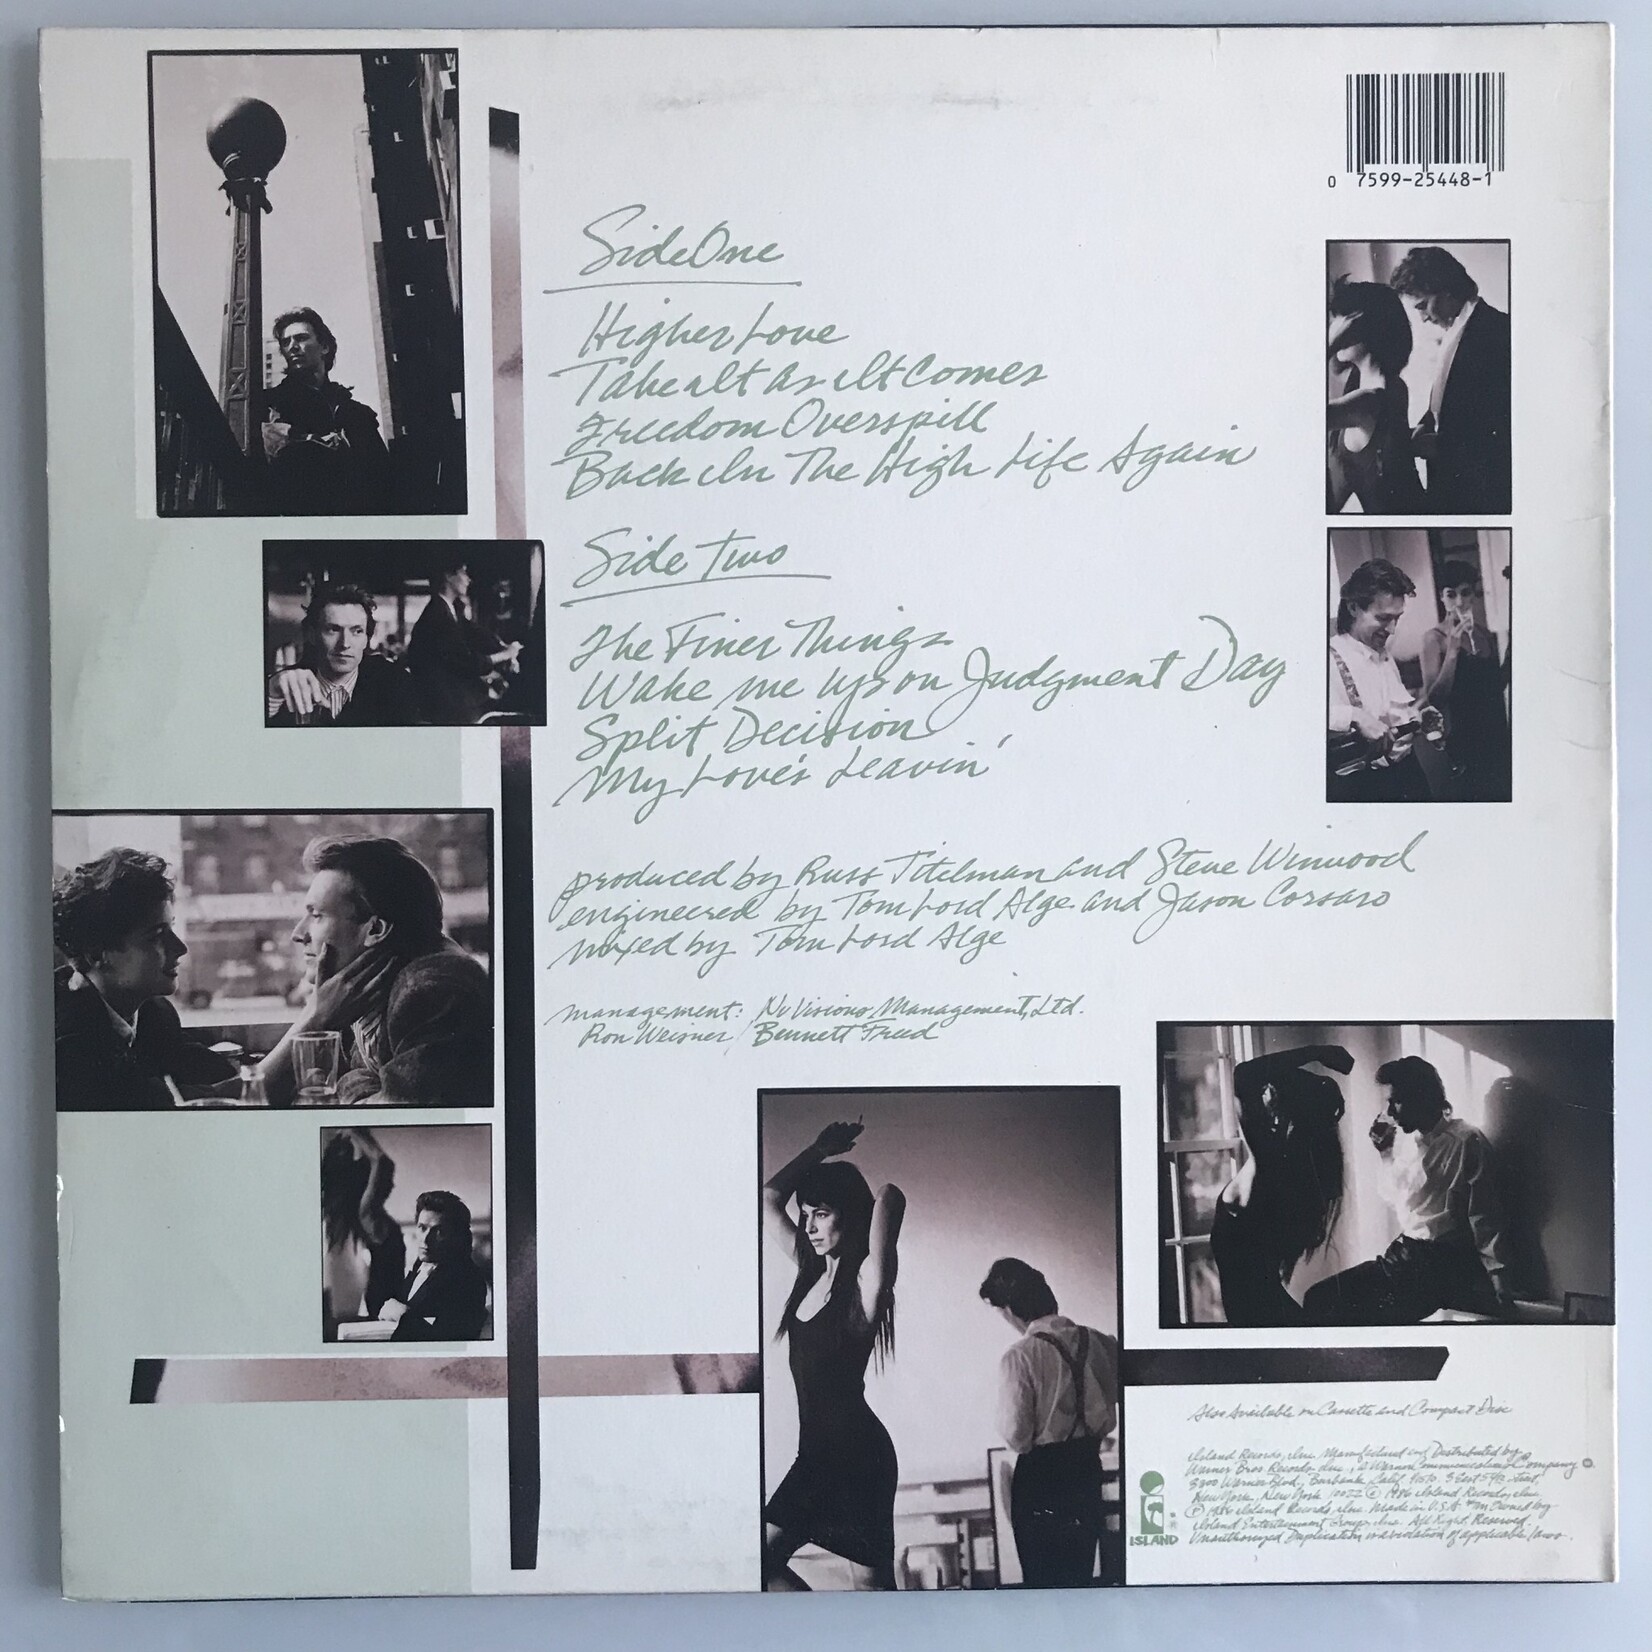 Steve Winwood - Back In The High Life - 9 25448 1 - Vinyl LP (USED)